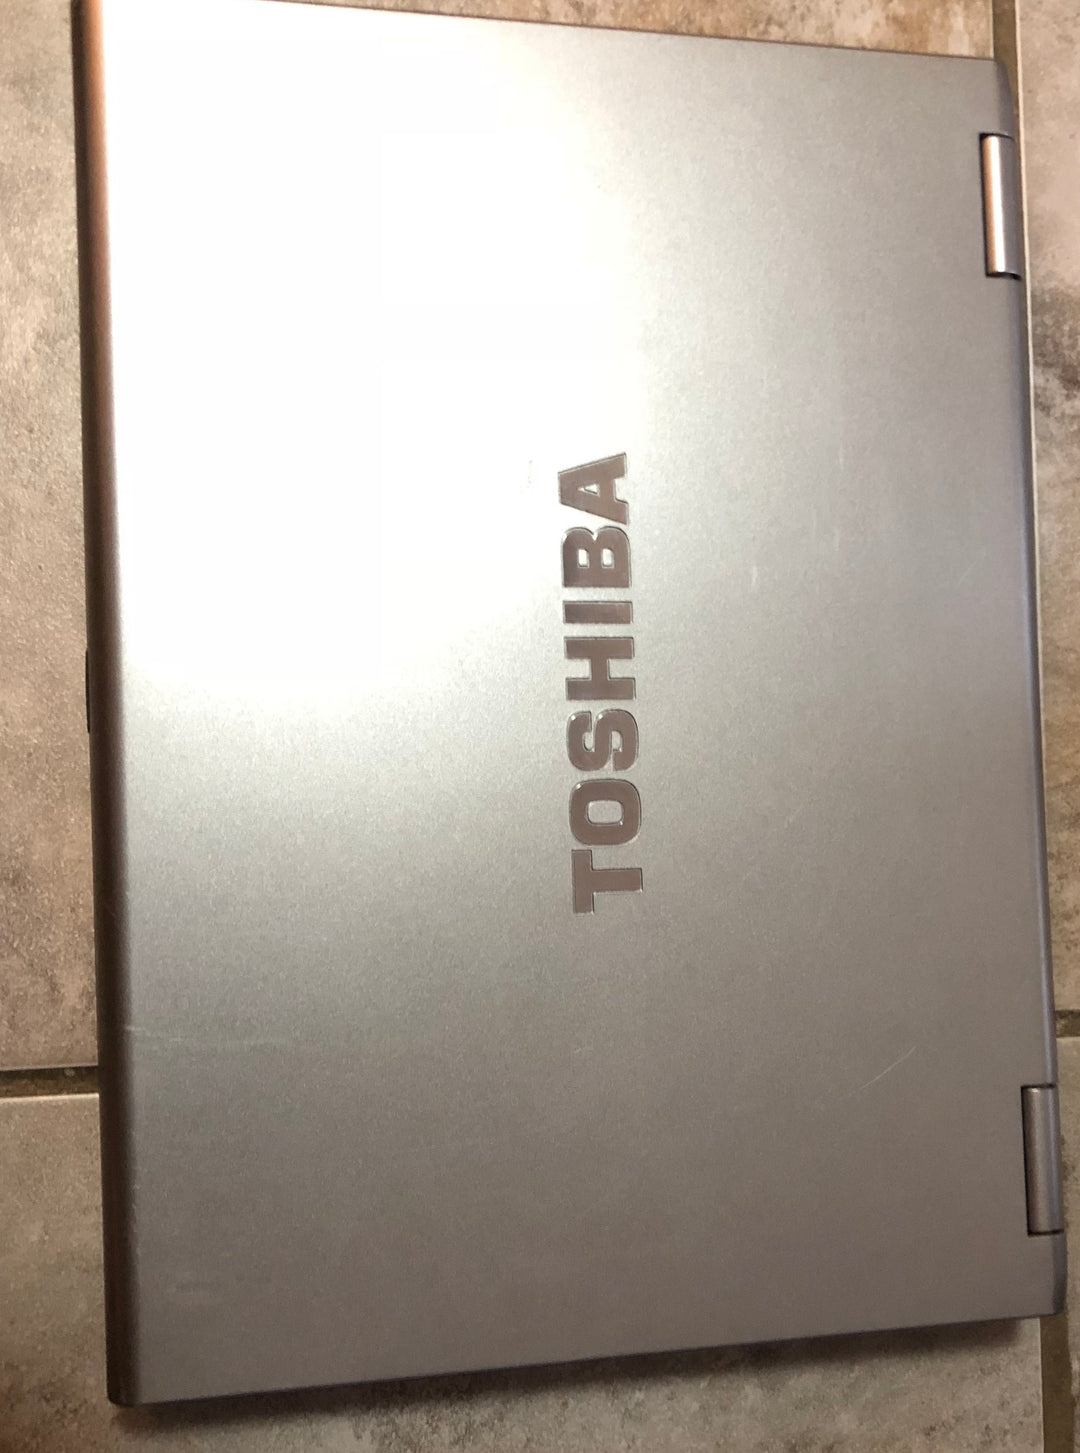 Toshiba Intel Core 2 Duo 2.26GHz Laptop 4GB 160GB 14" DVDRW Vista SDCard Webcam - Deal Changer